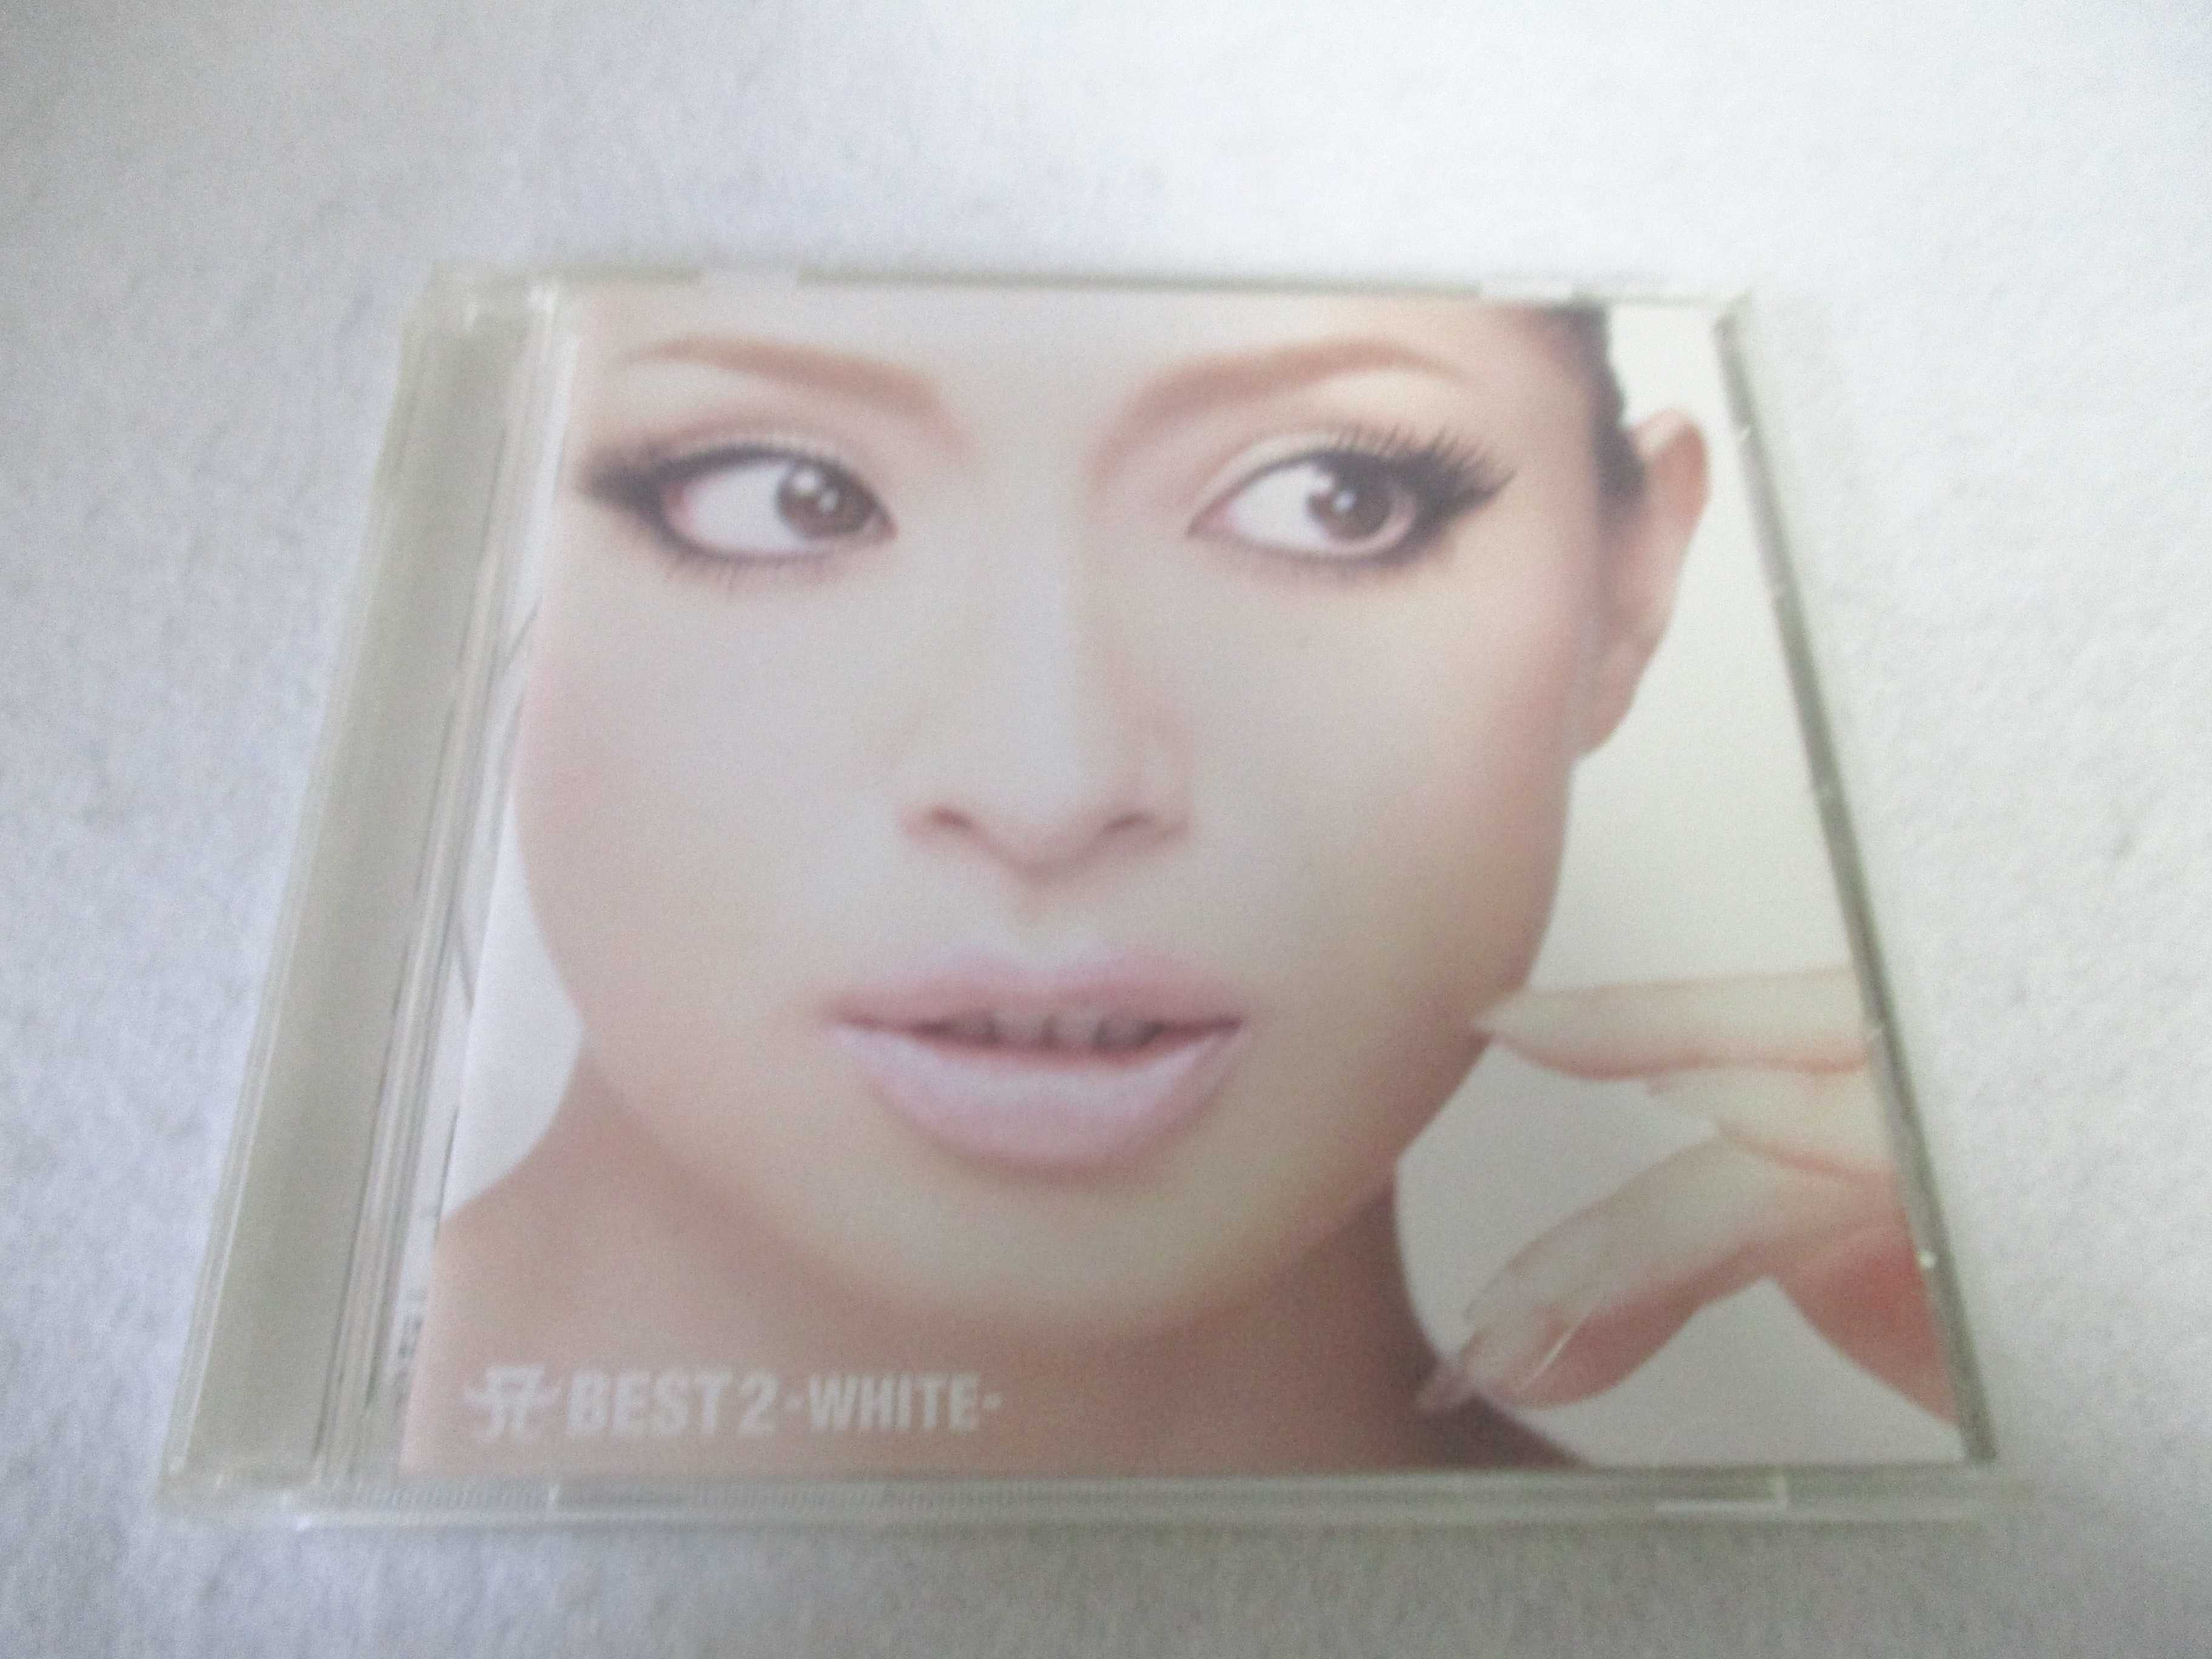 AC04292 【中古】 【CD】 BEST2-WHITE-/浜